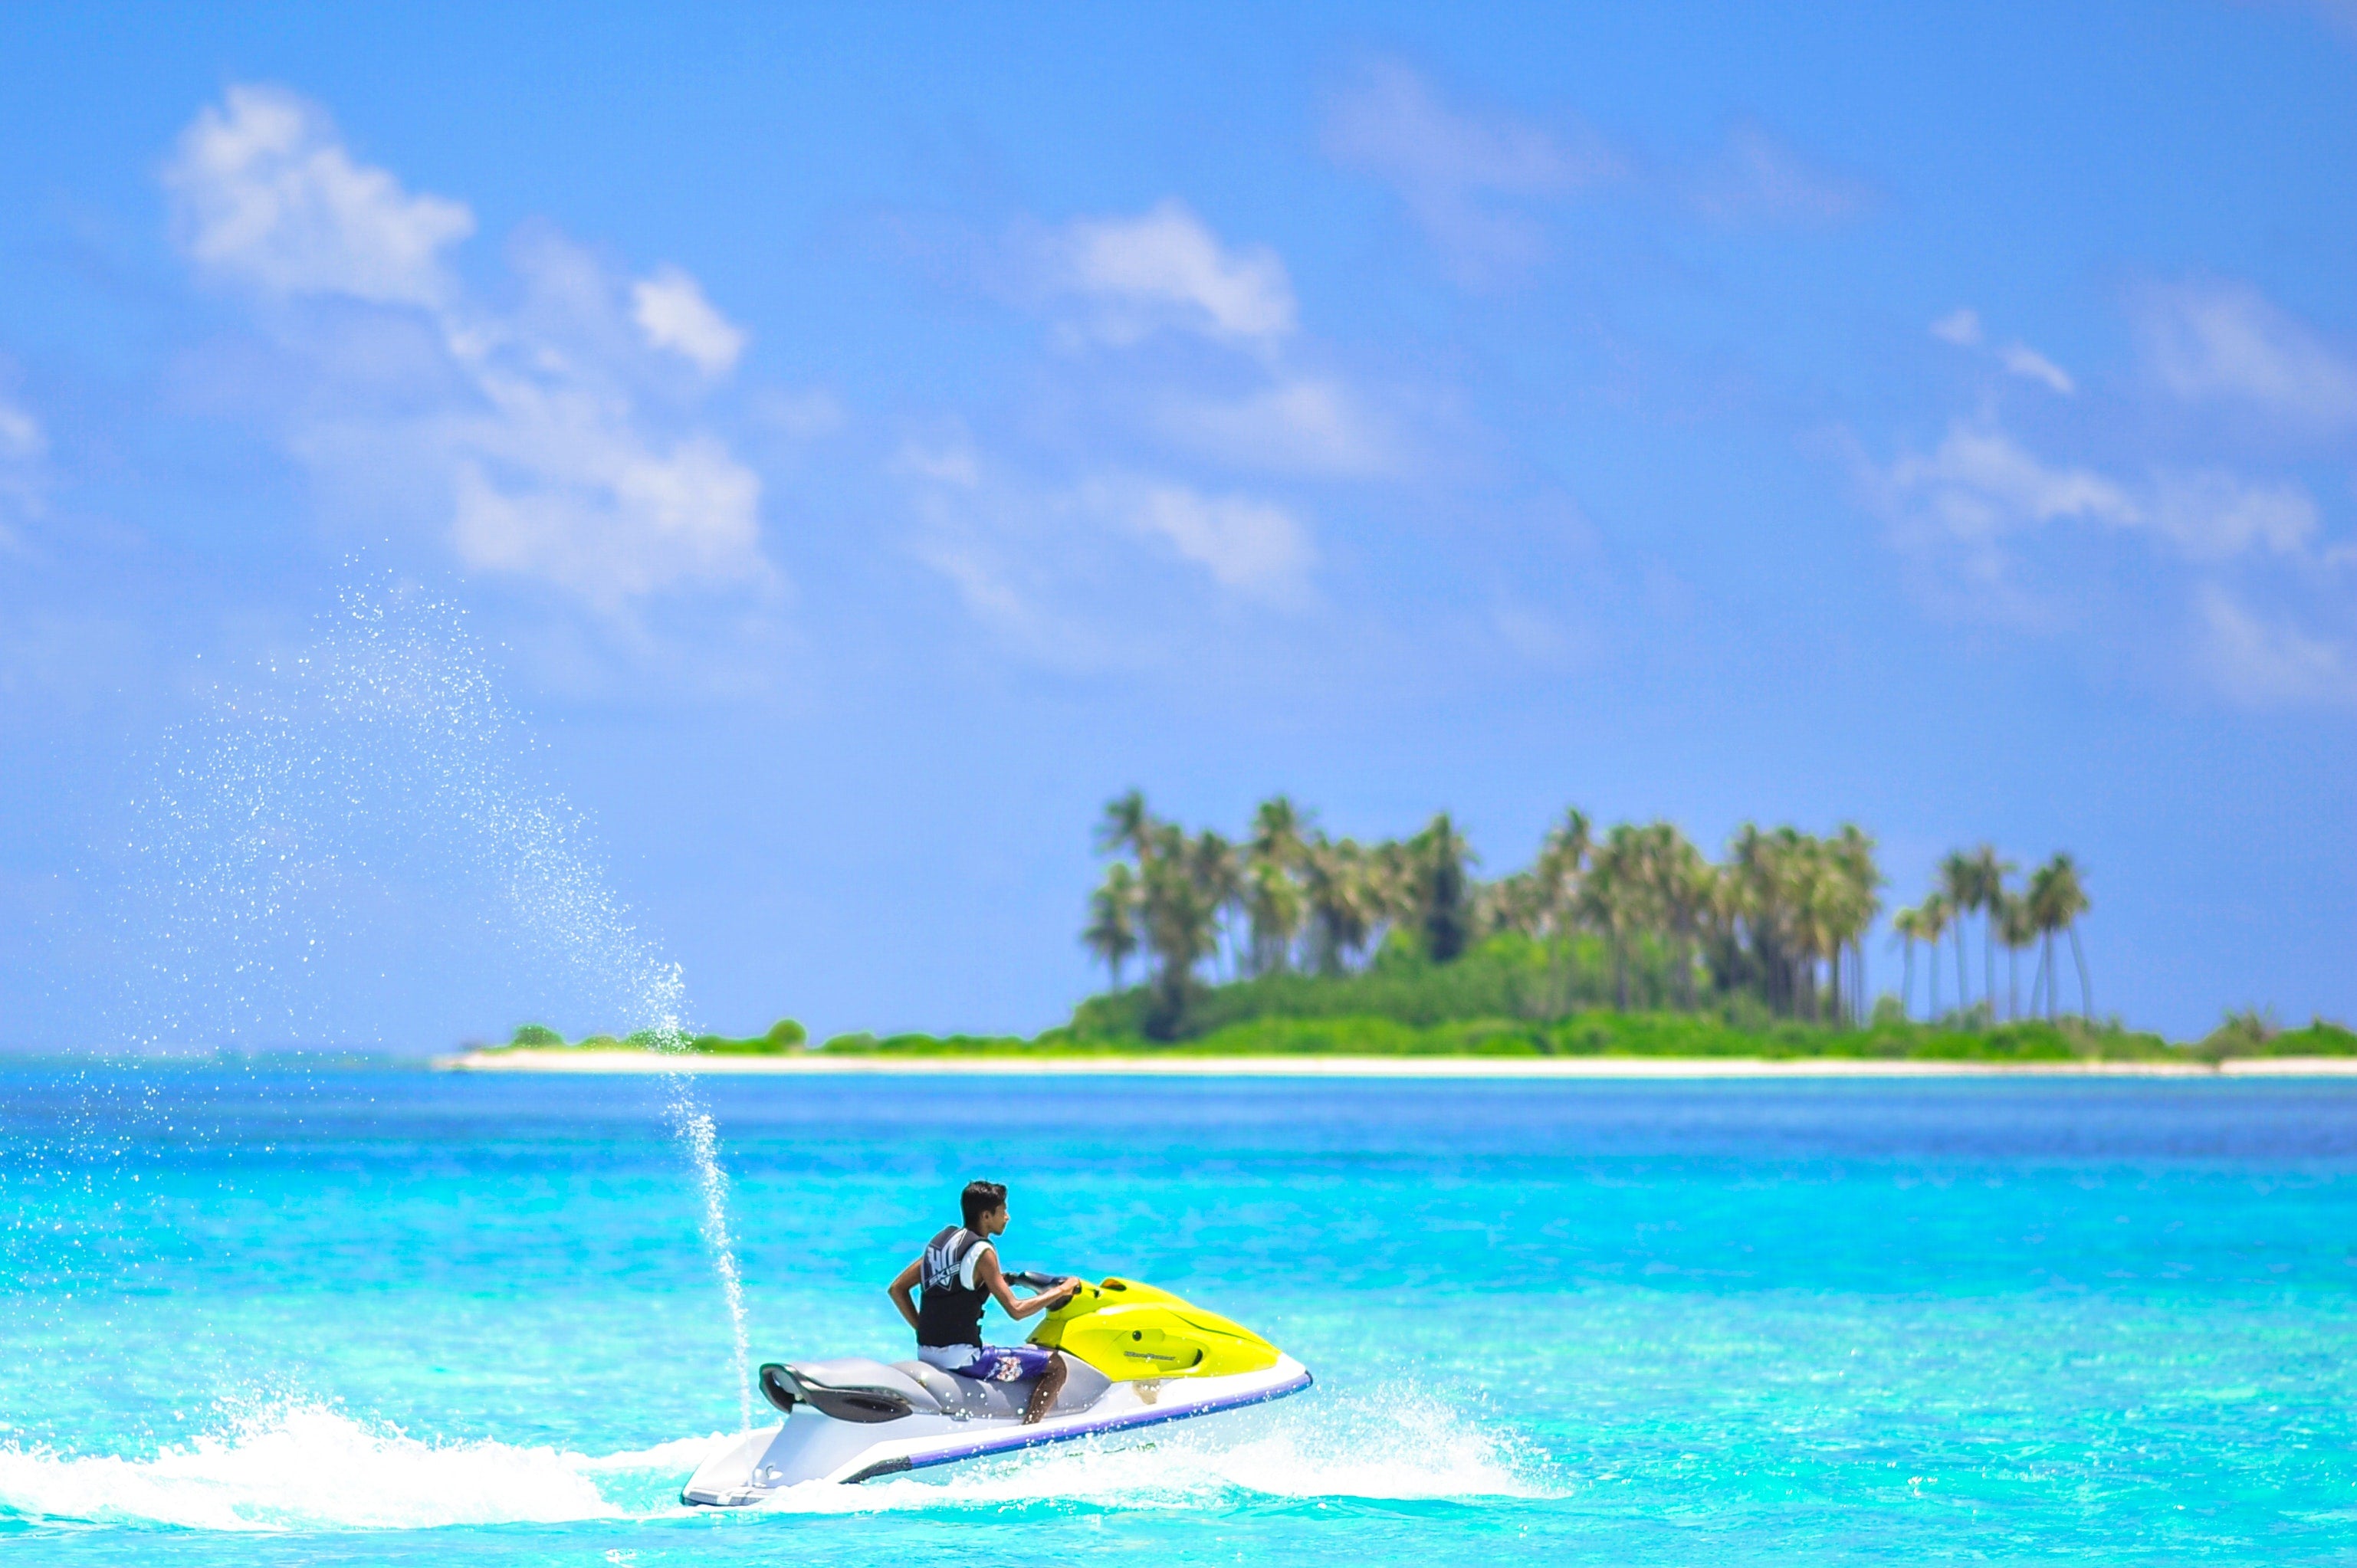 jetski training around a lush tropical island